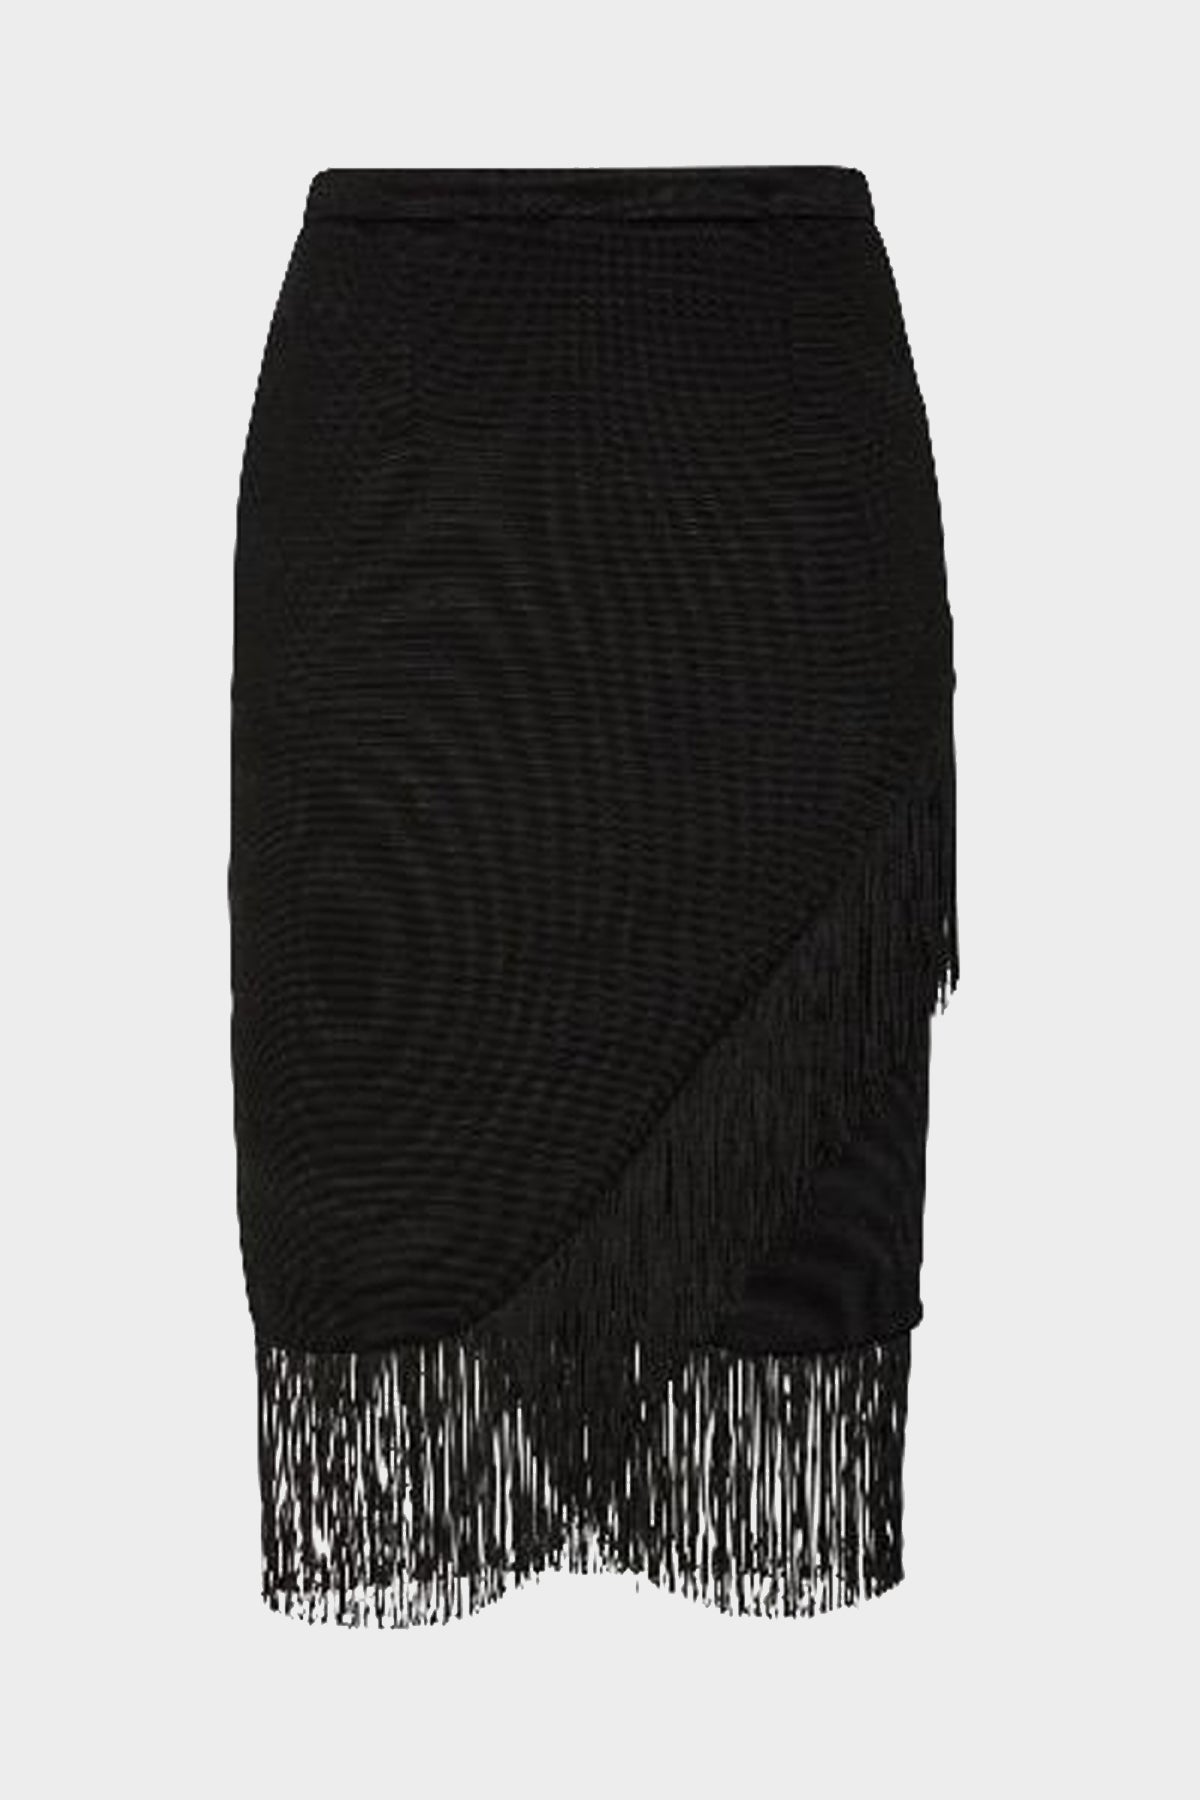 Lola Fringe Mini Skirt in Black - shop-olivia.com